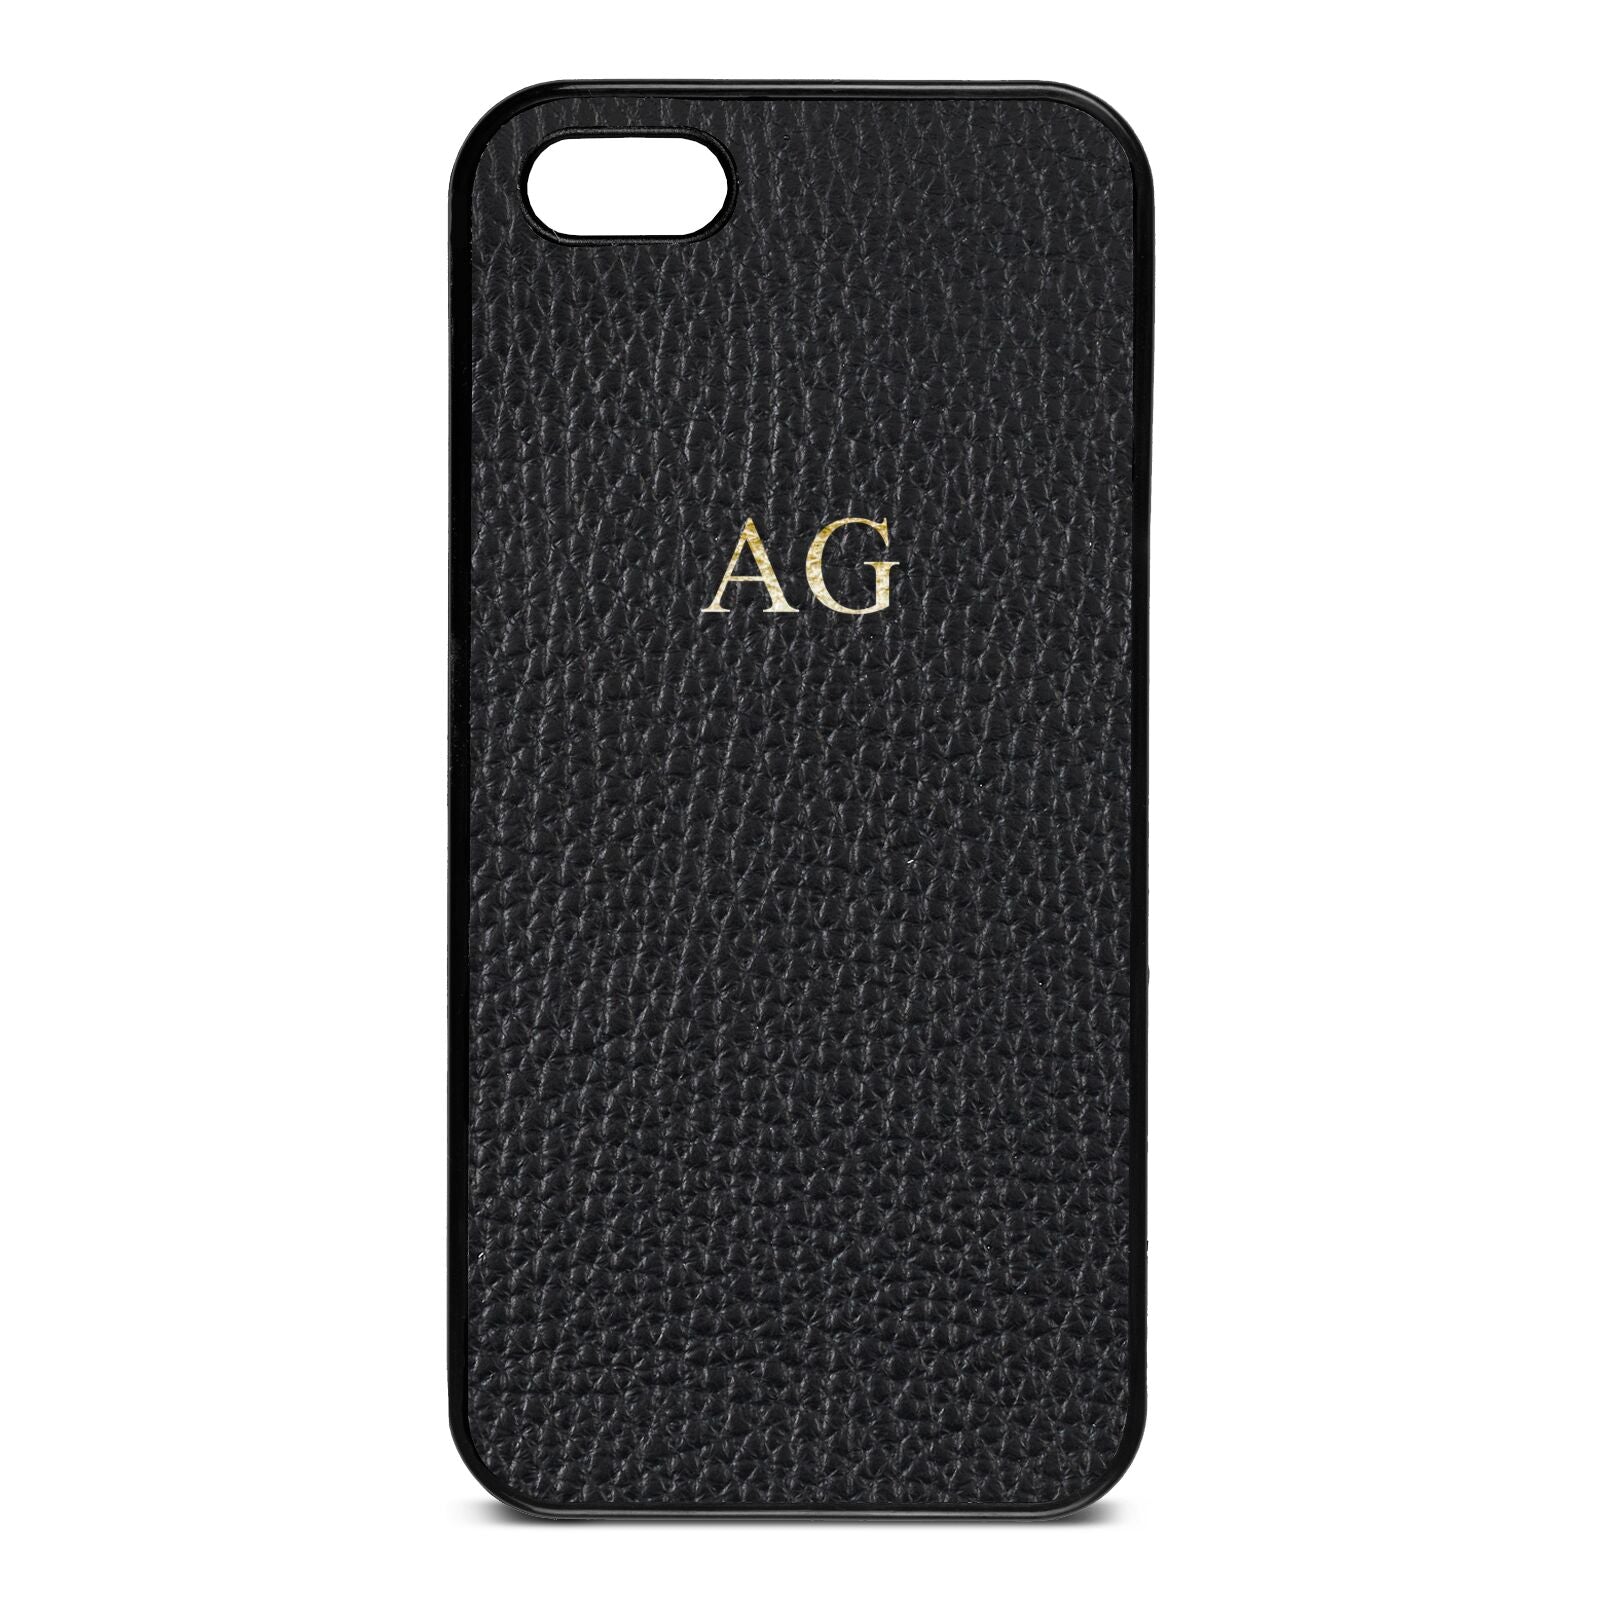 Personalised Black Pebble Leather iPhone 5 Case